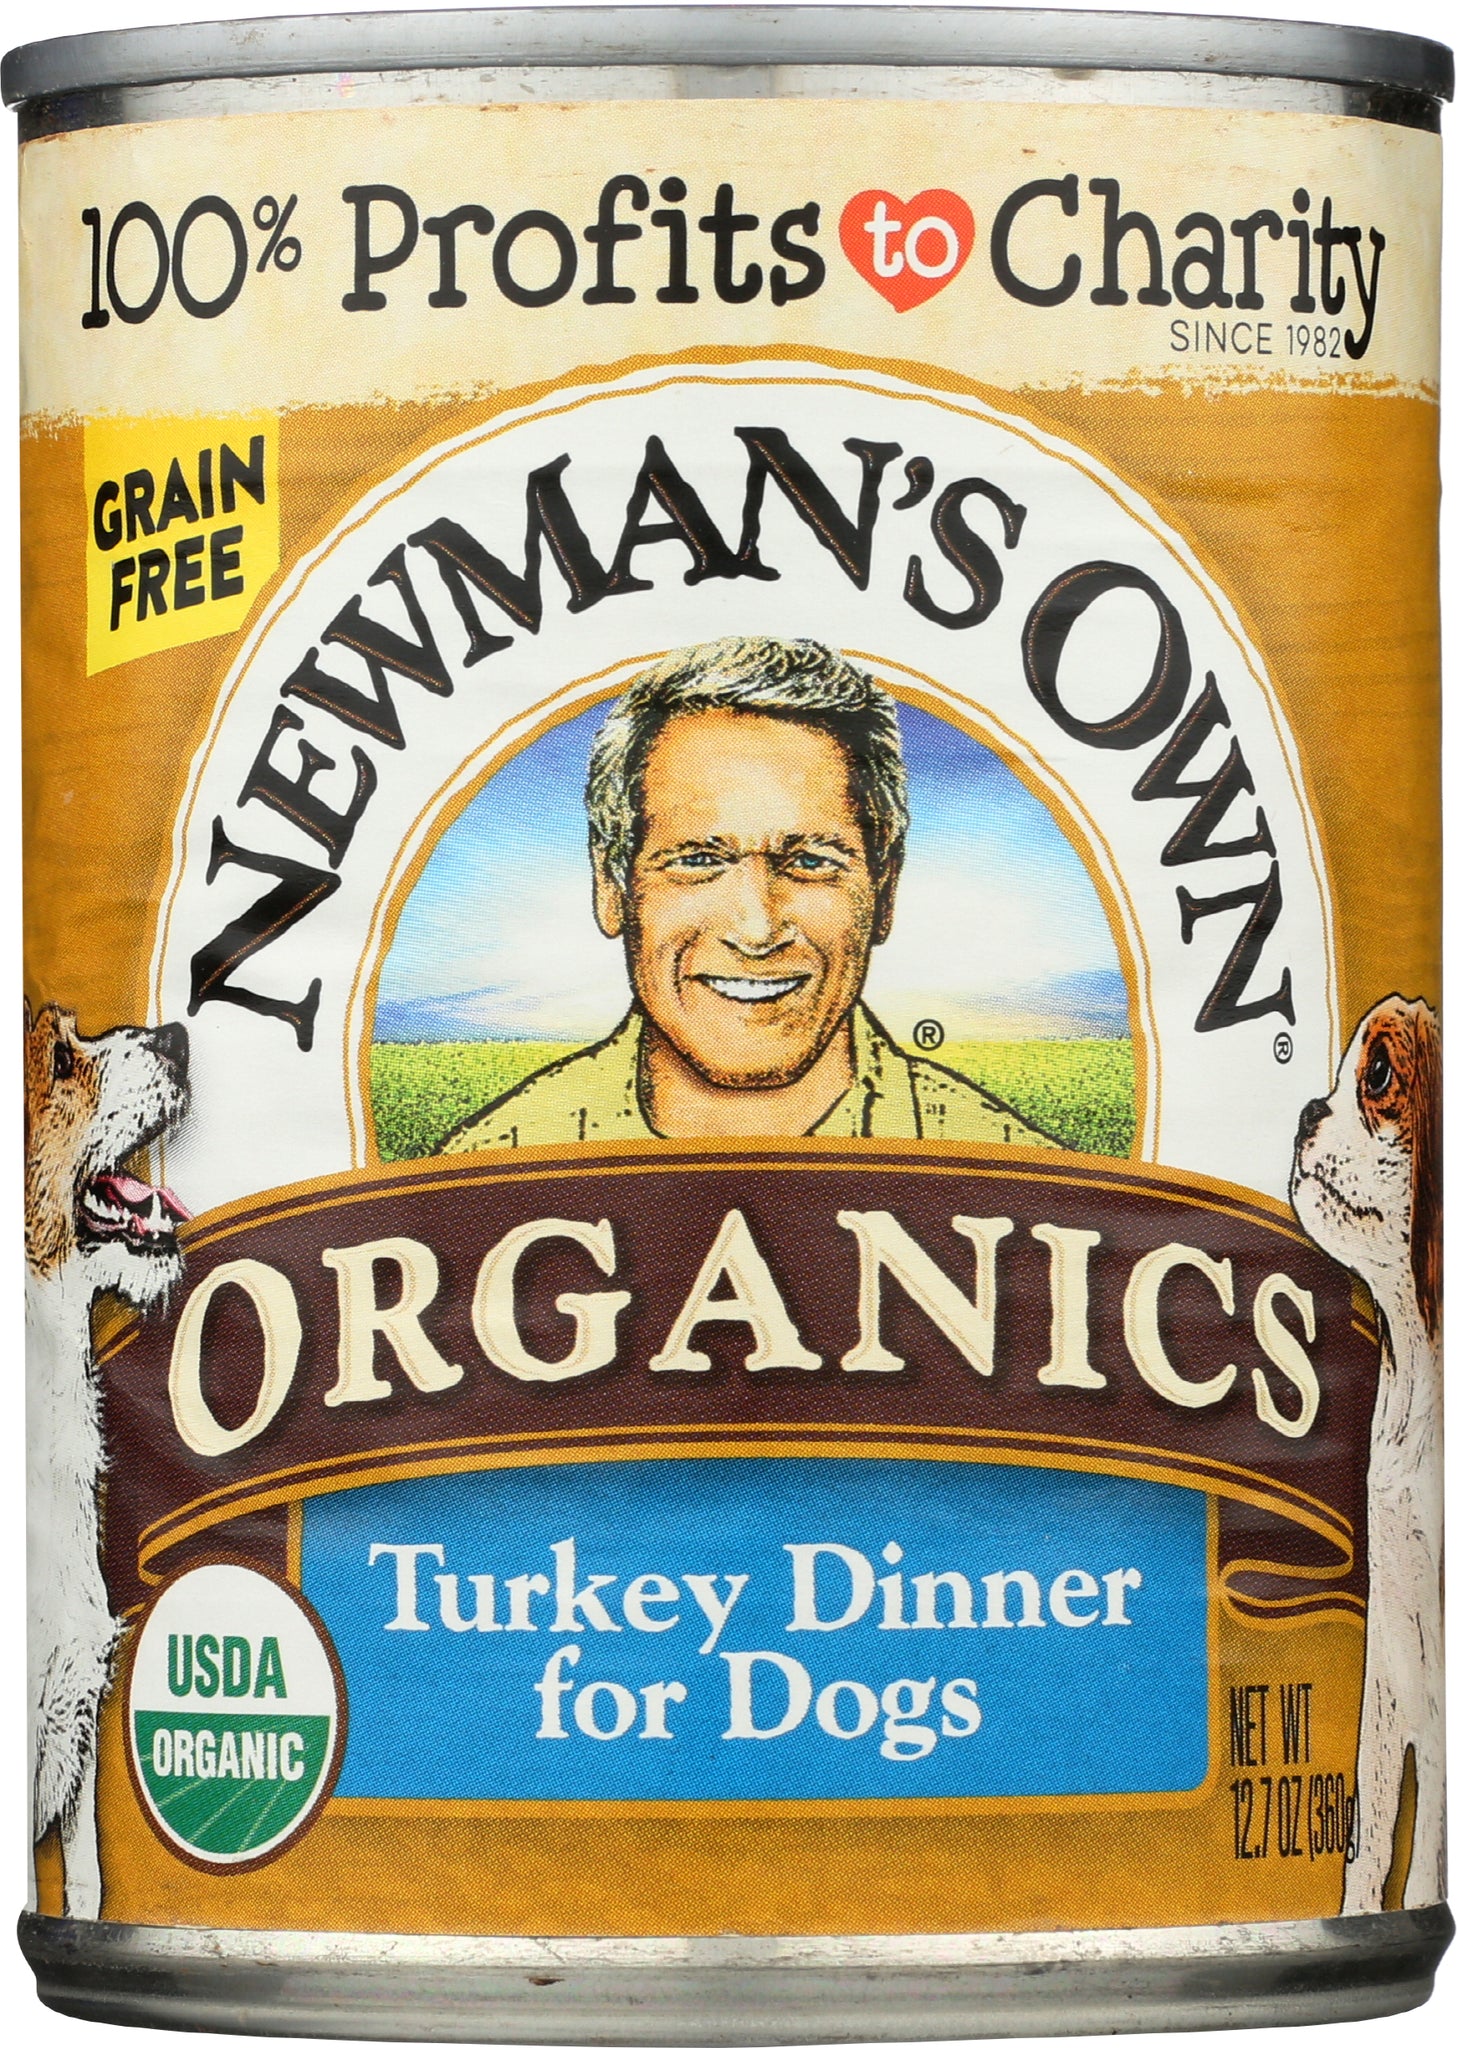 Newmans Own Organics Grain Free Turkey Dinner Can Dog Food, 12.7 OZ (Pack of 12)